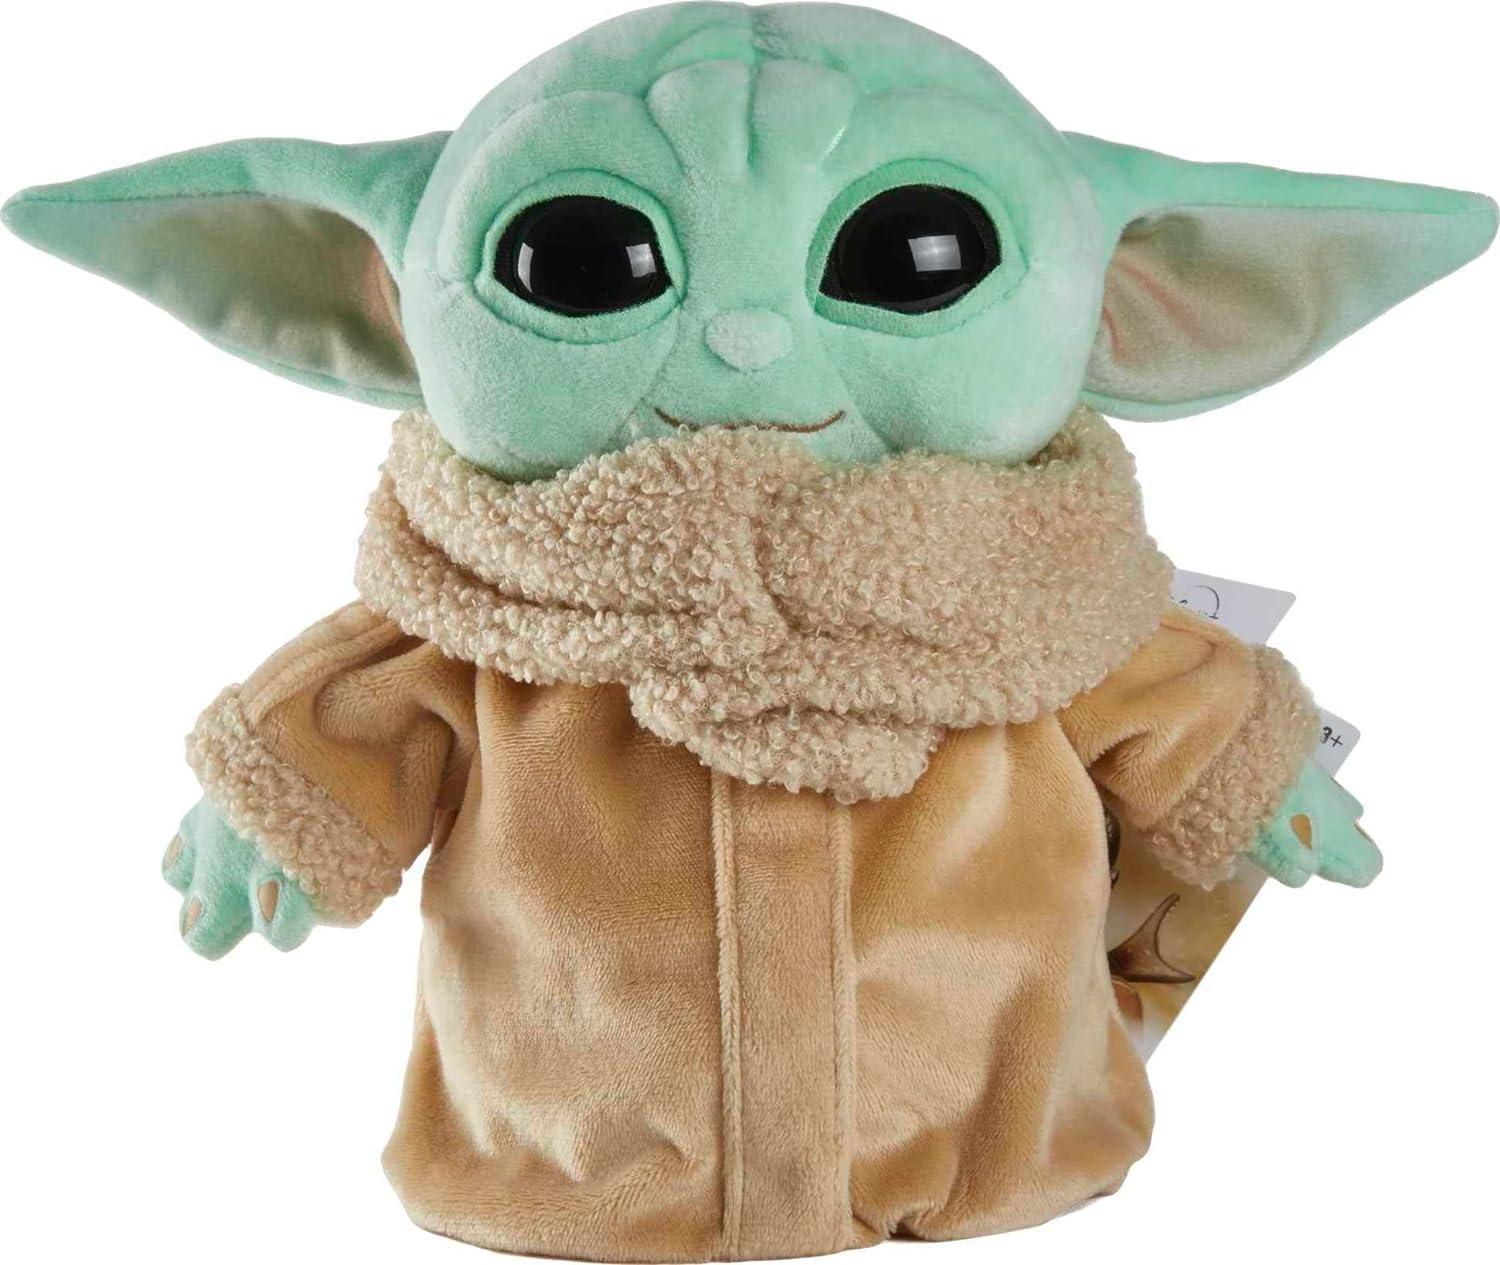 Mattel Star Wars The Mandalorian Grogu Plush Toy for $4.19